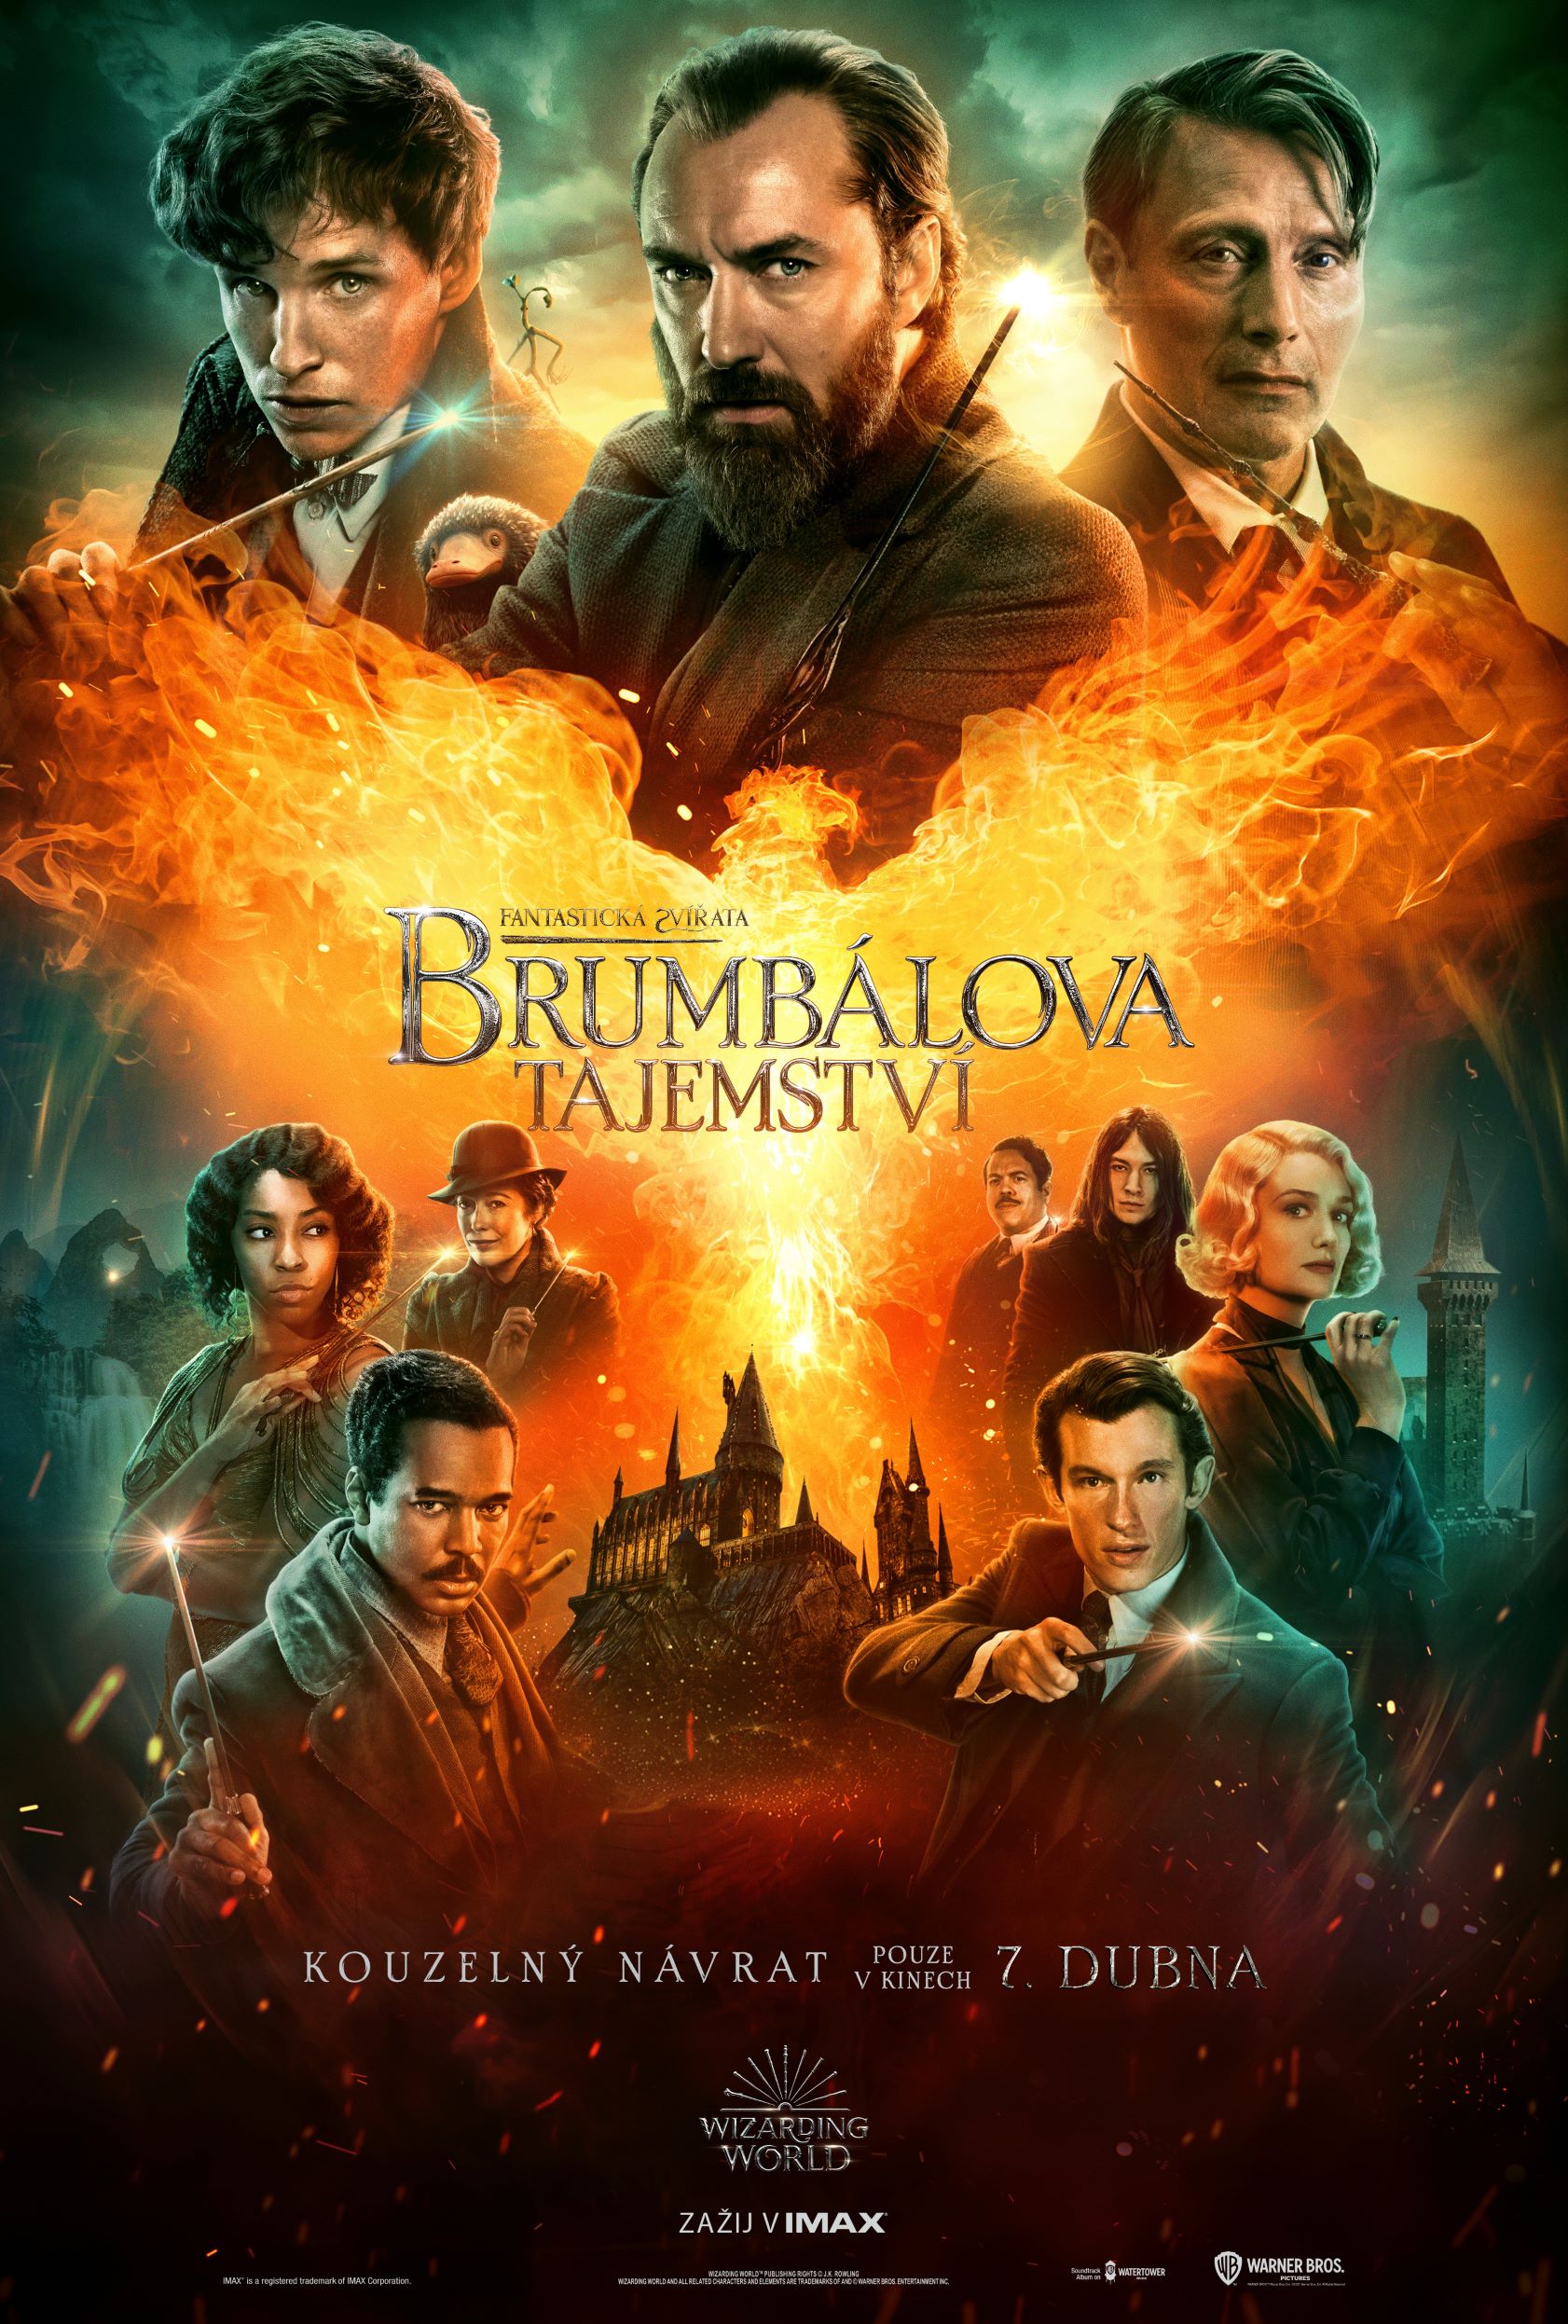 Stiahni si Filmy bez titulků Fantasticka zvirata: Brumbalova tajemstvi / Fantastic Beasts: The Secrets of Dumbledore (2022)[WebRip][1080p] = CSFD 62%